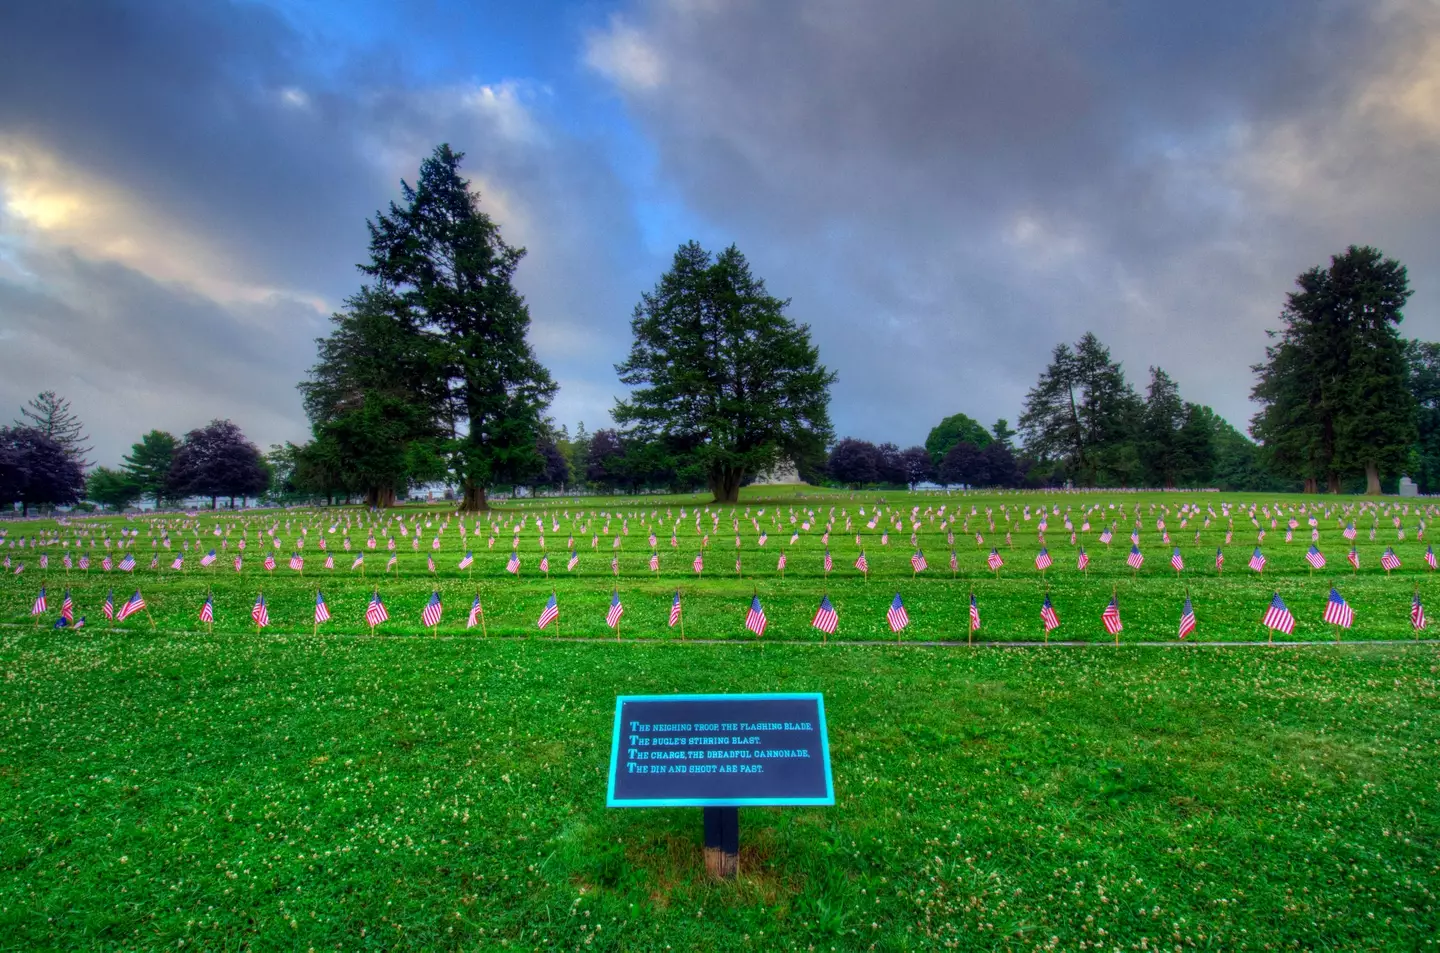 As many as 51,000 people died in the Battle of Gettysburg.